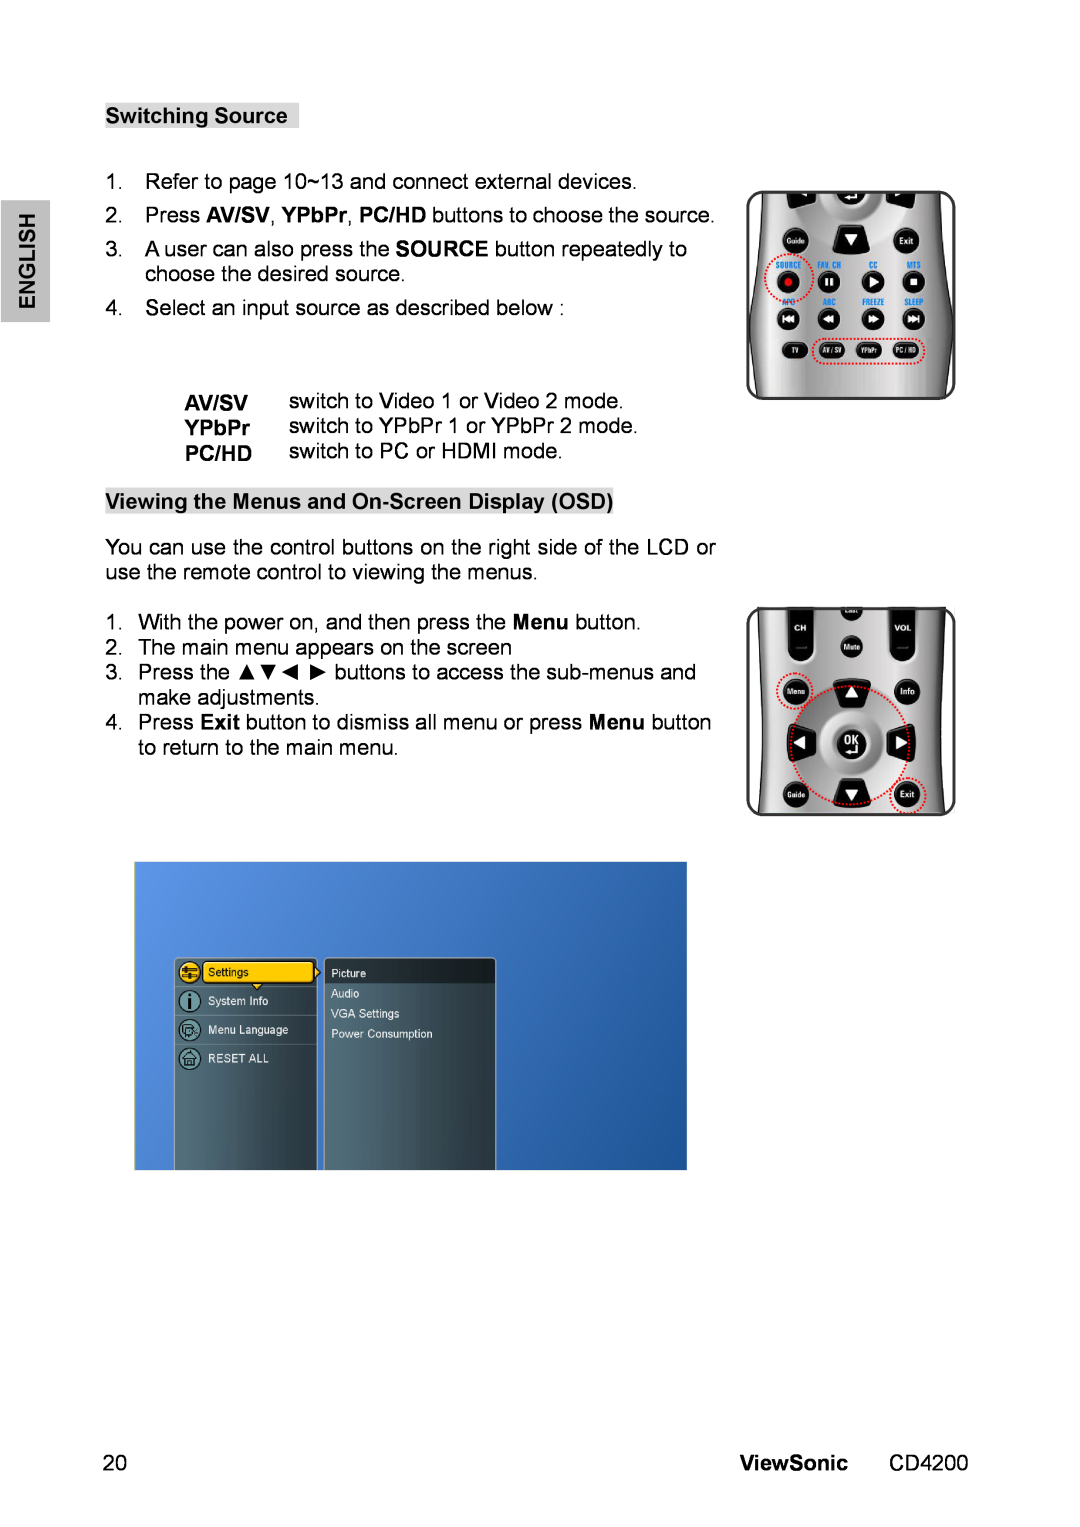 ViewSonic CD4200 Switching Source, Av/Sv, YPbPr, Pc/Hd, Viewing the Menus and On-Screen Display OSD, English, ViewSonic 